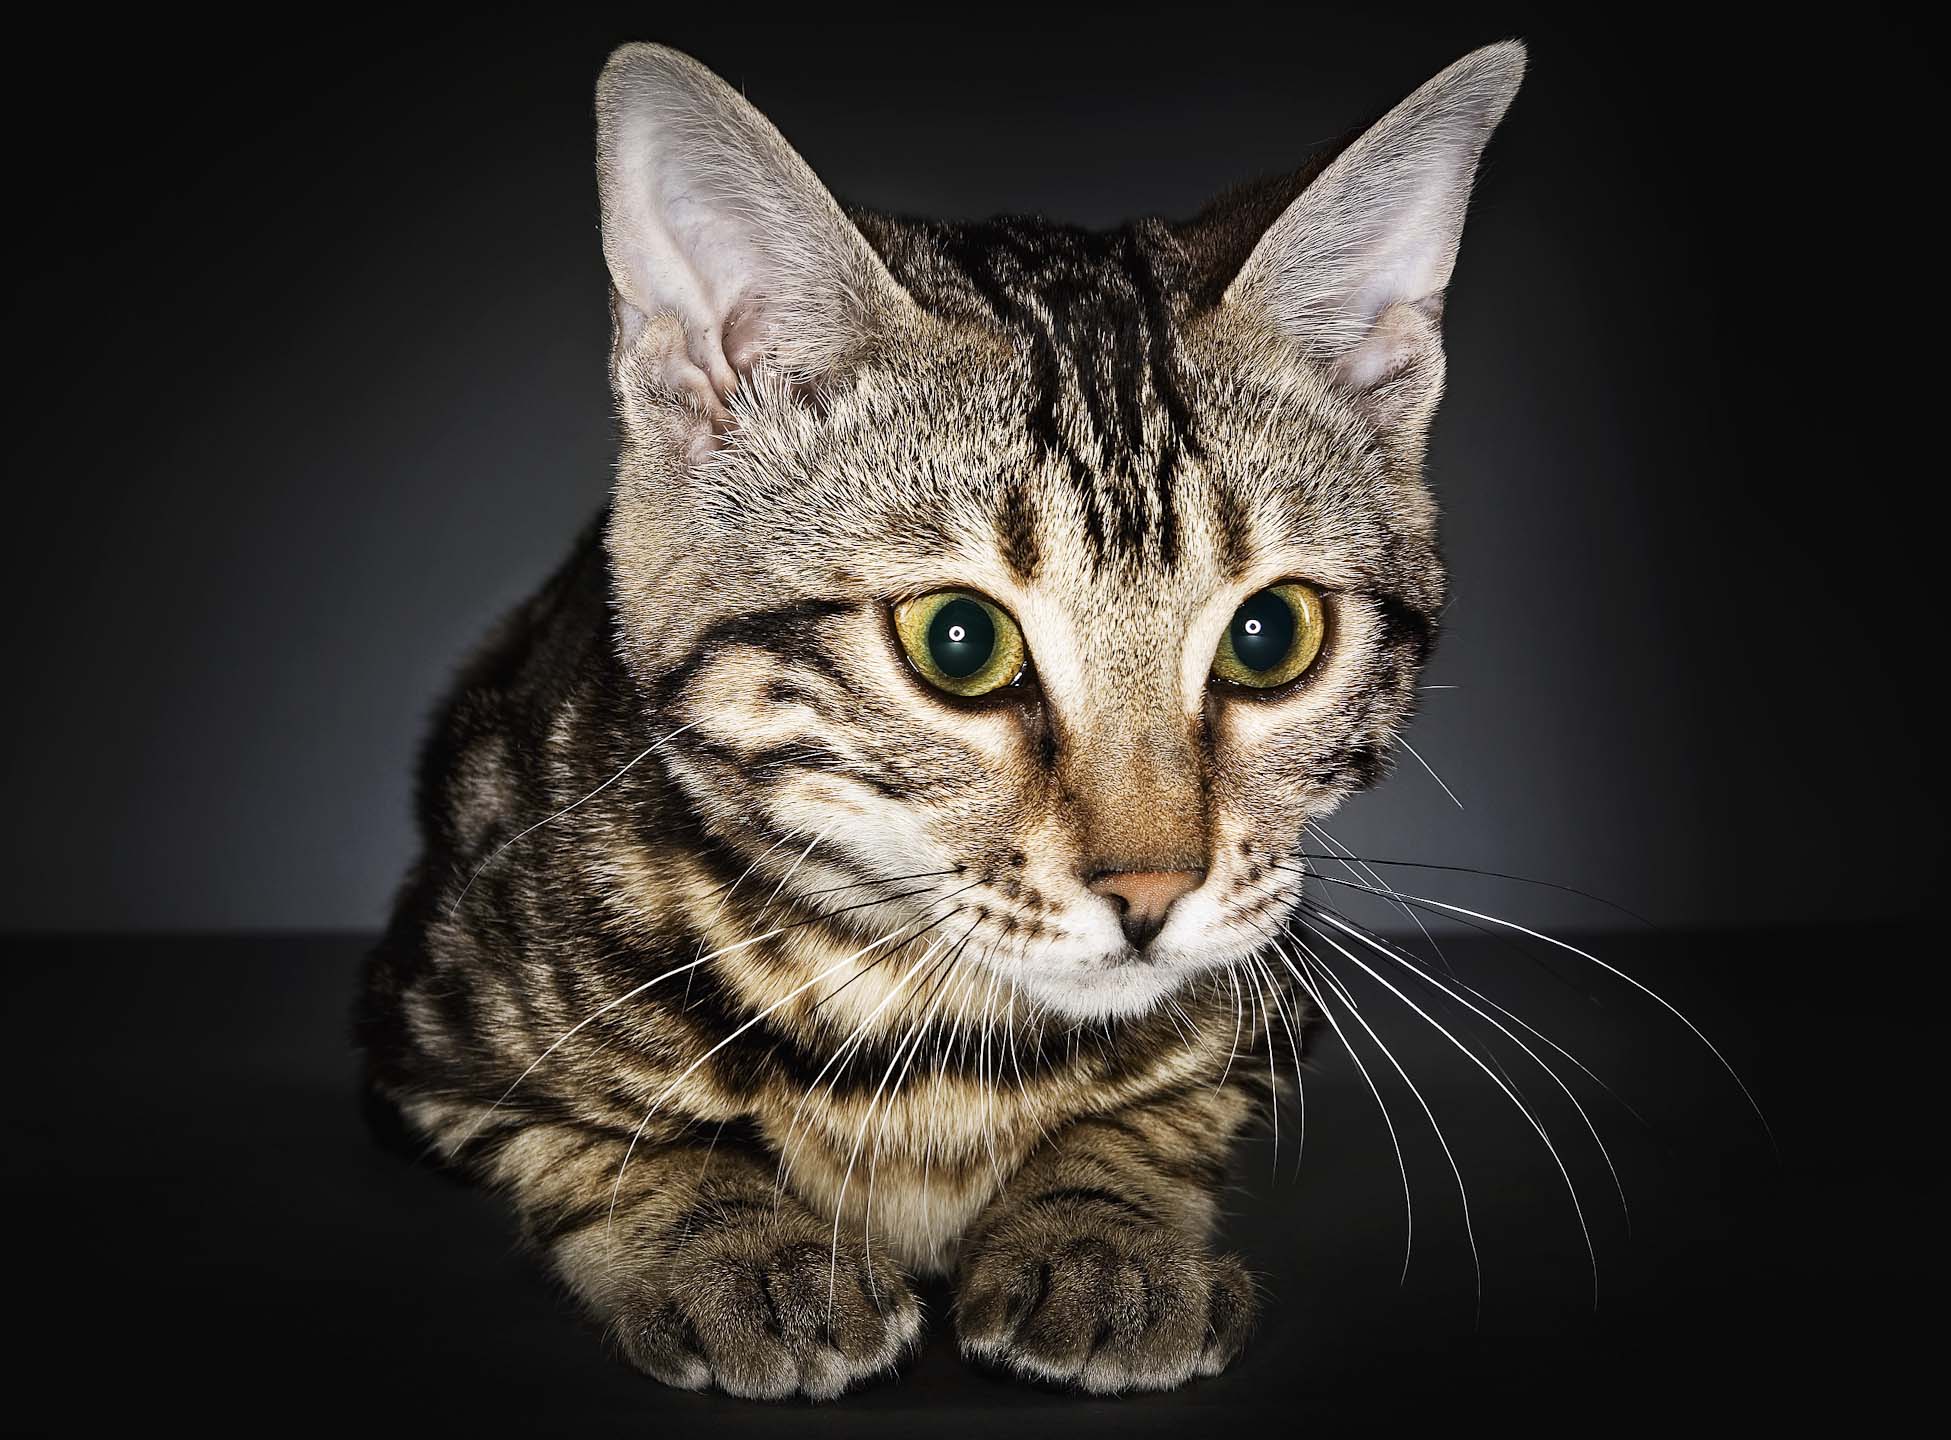 Alex Howe animal curious cat studio portrait